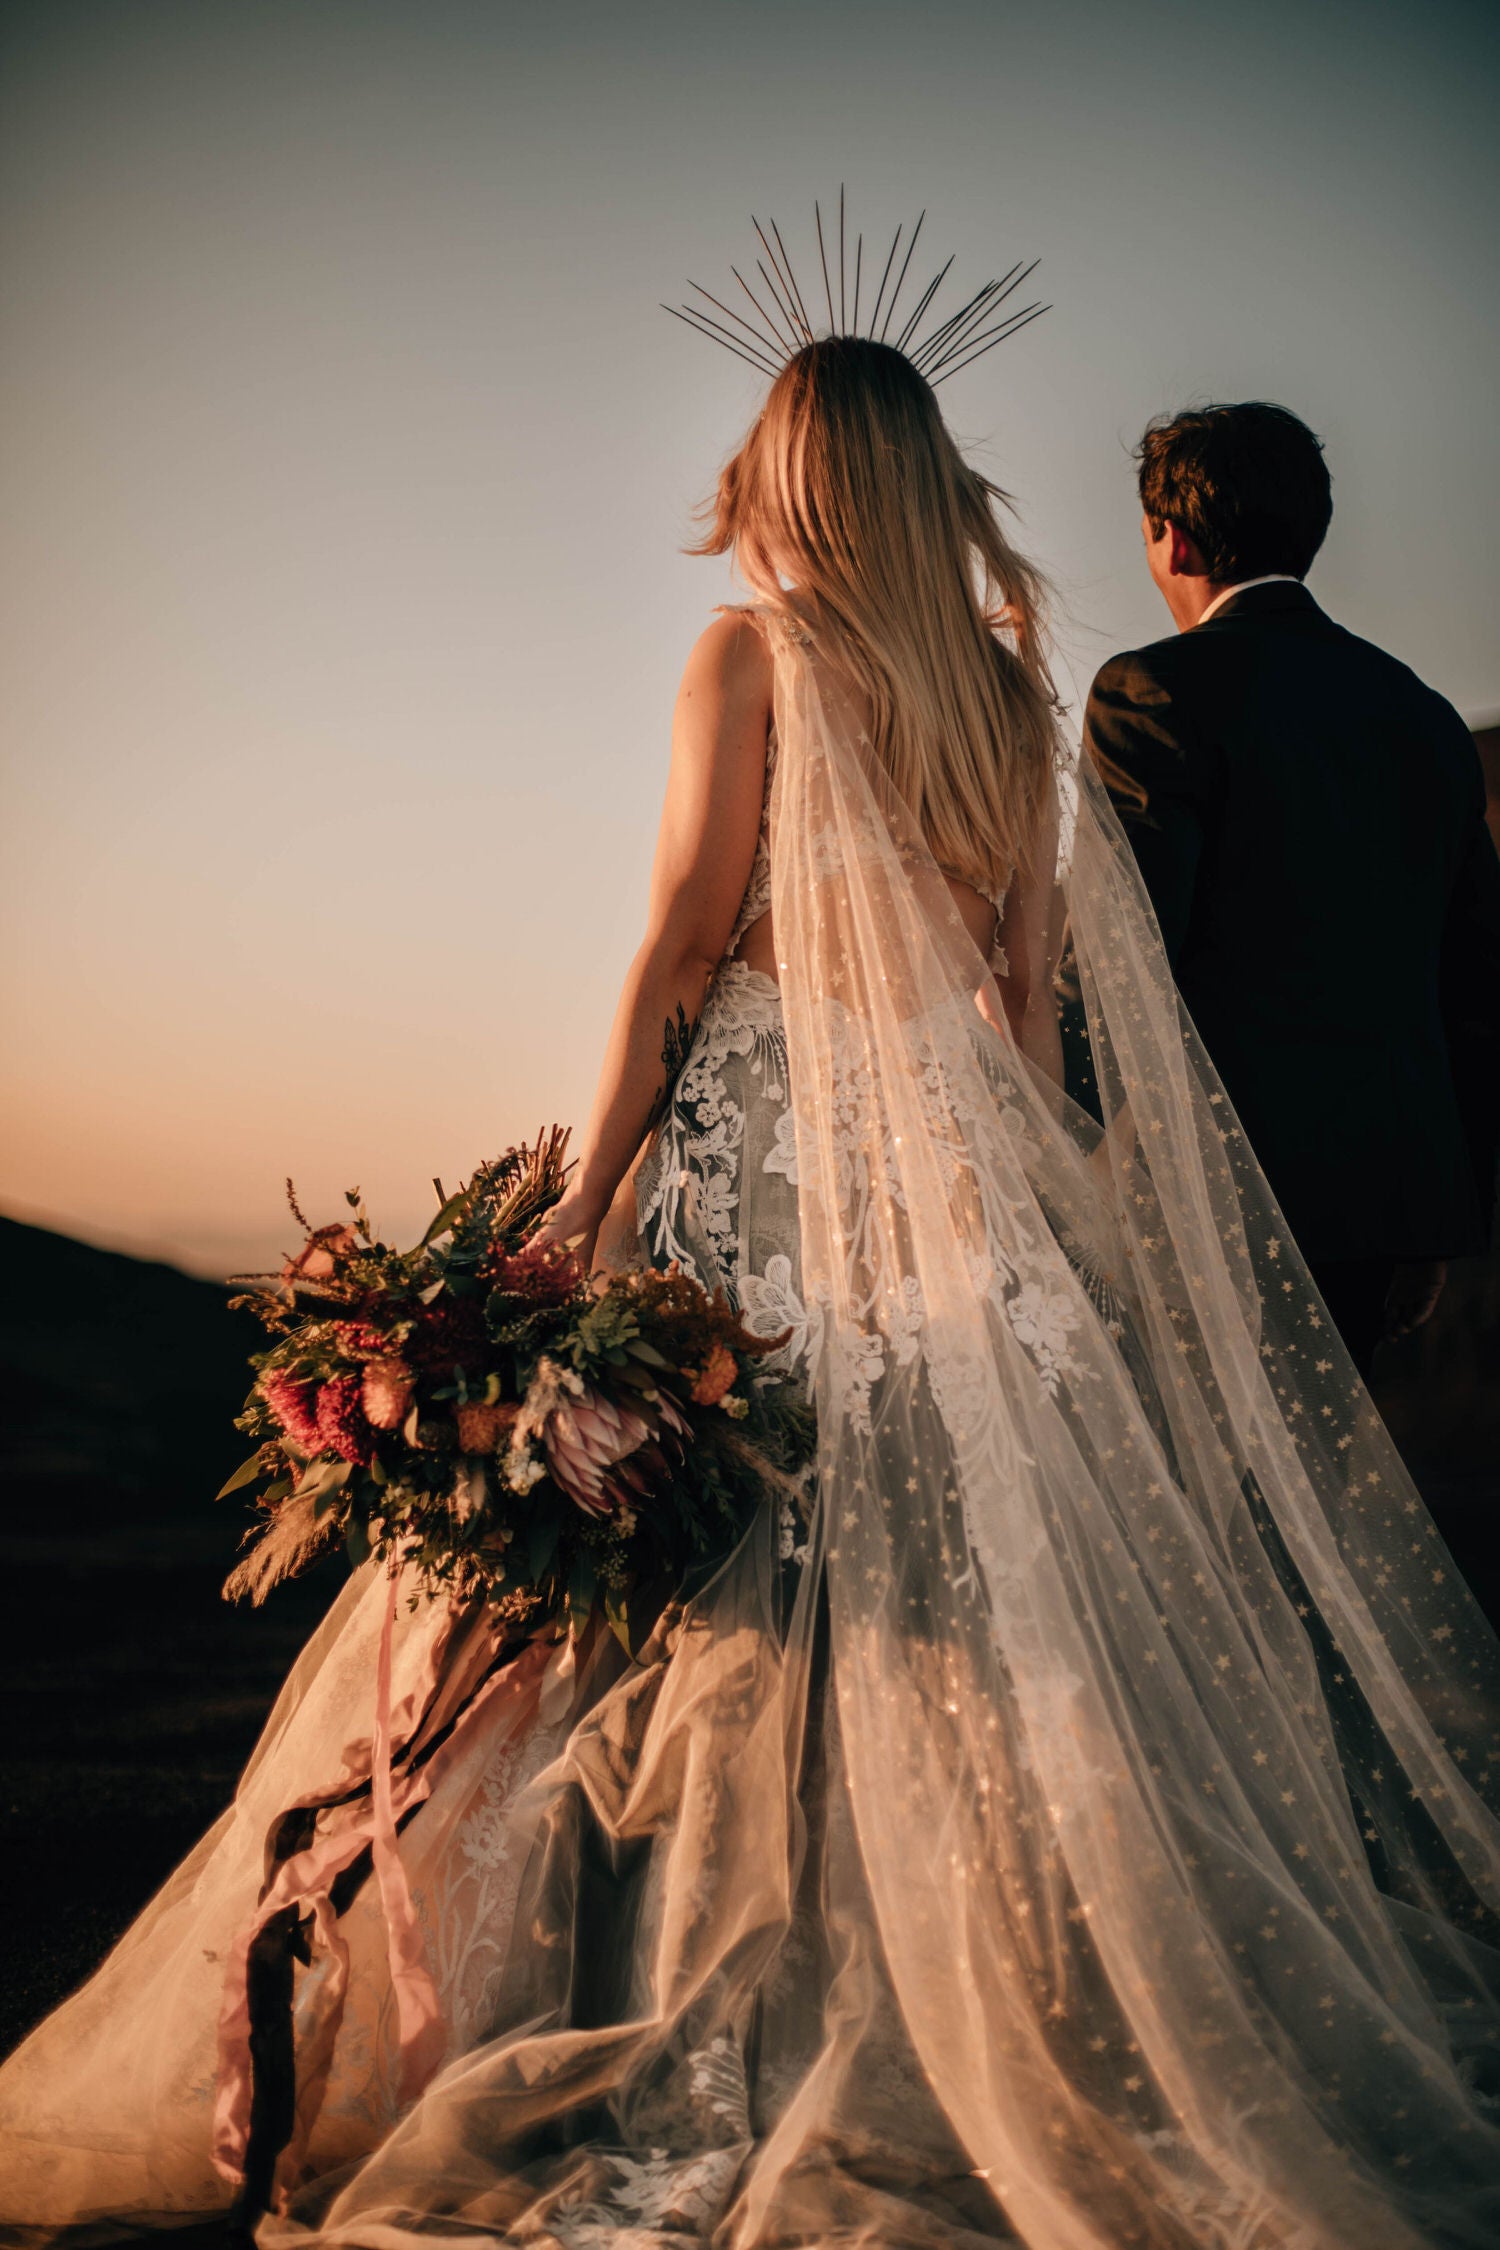 Attaching wedding veils, detachable bridal veils